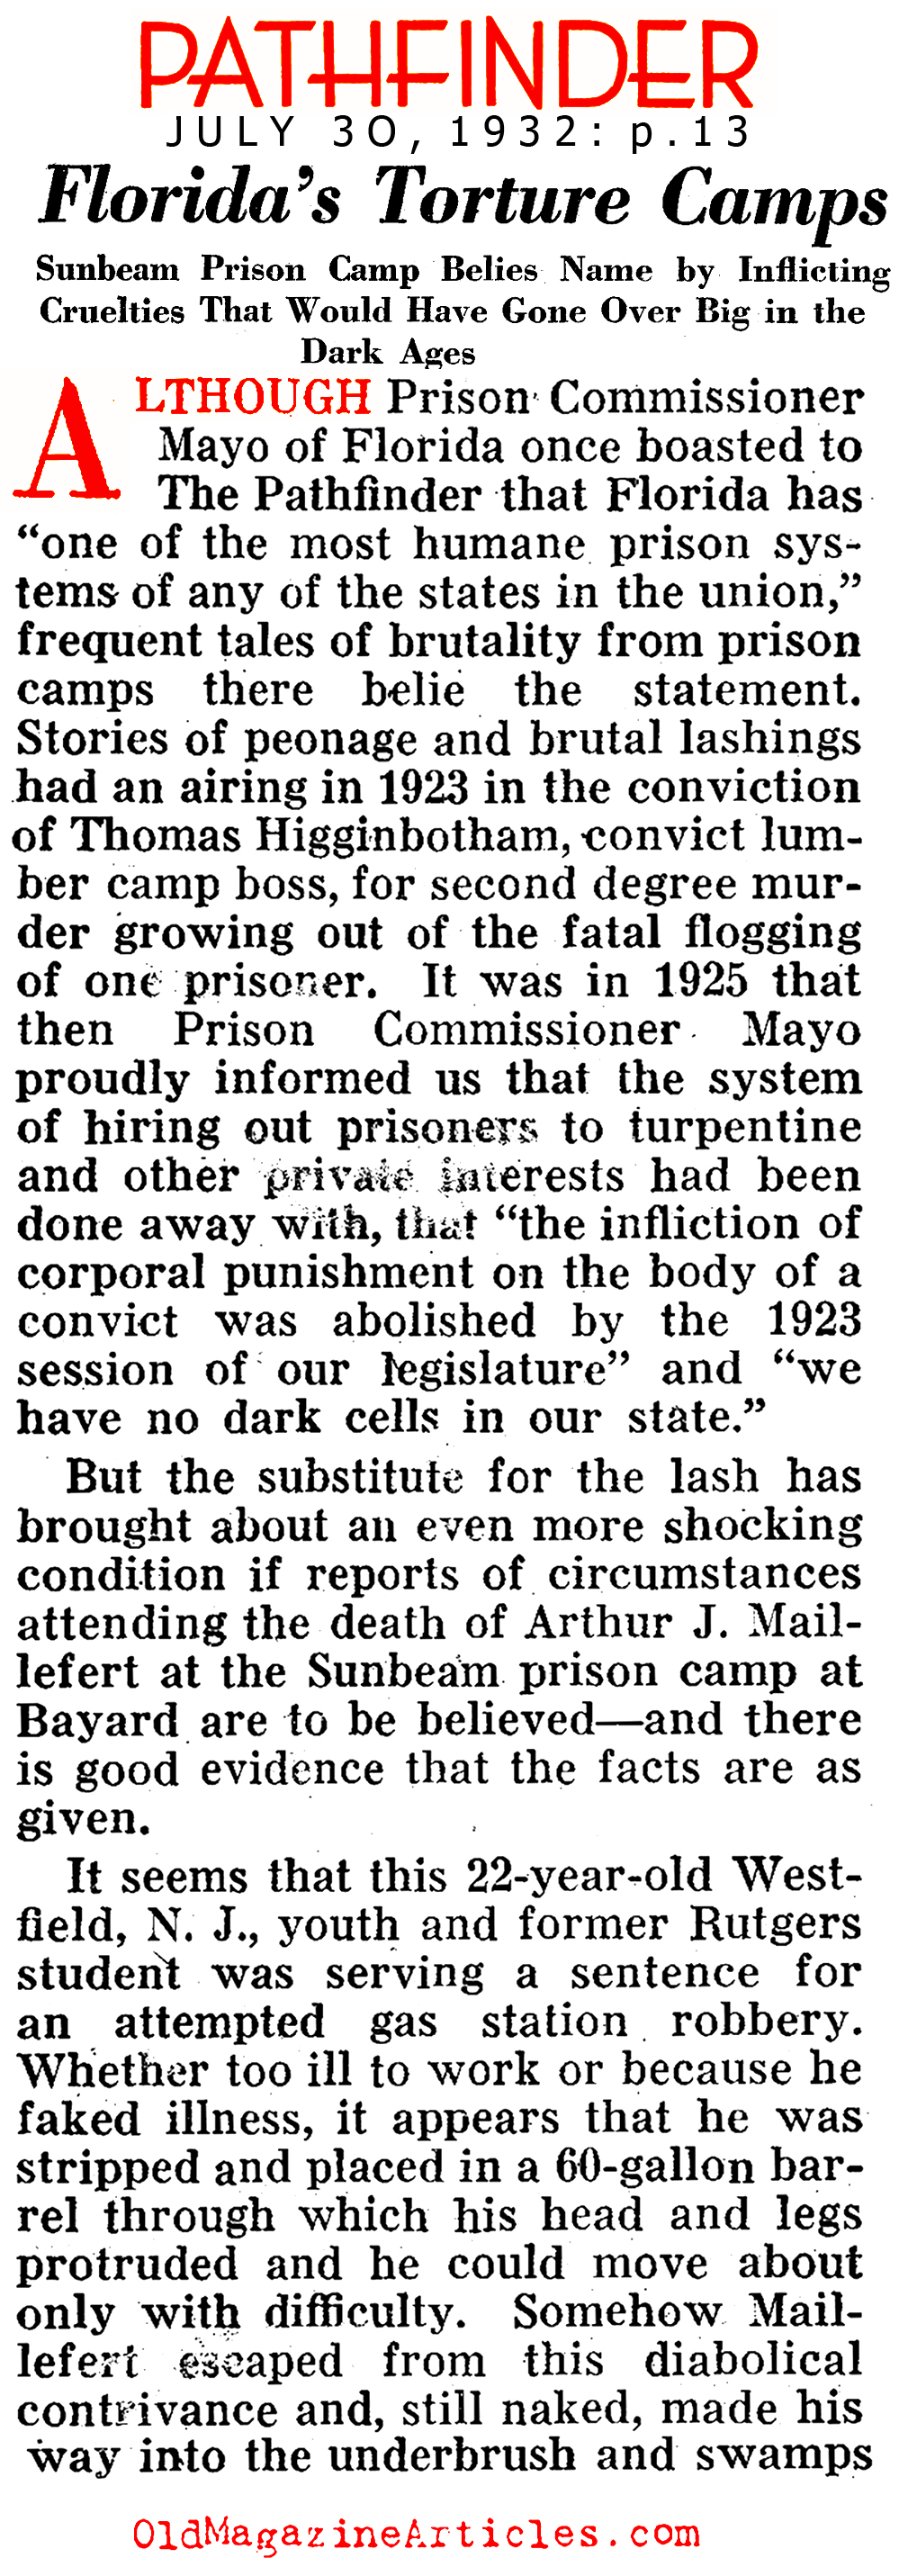 Abuses at Sunbeam Prison (Pathfinder Magazine, 1932)